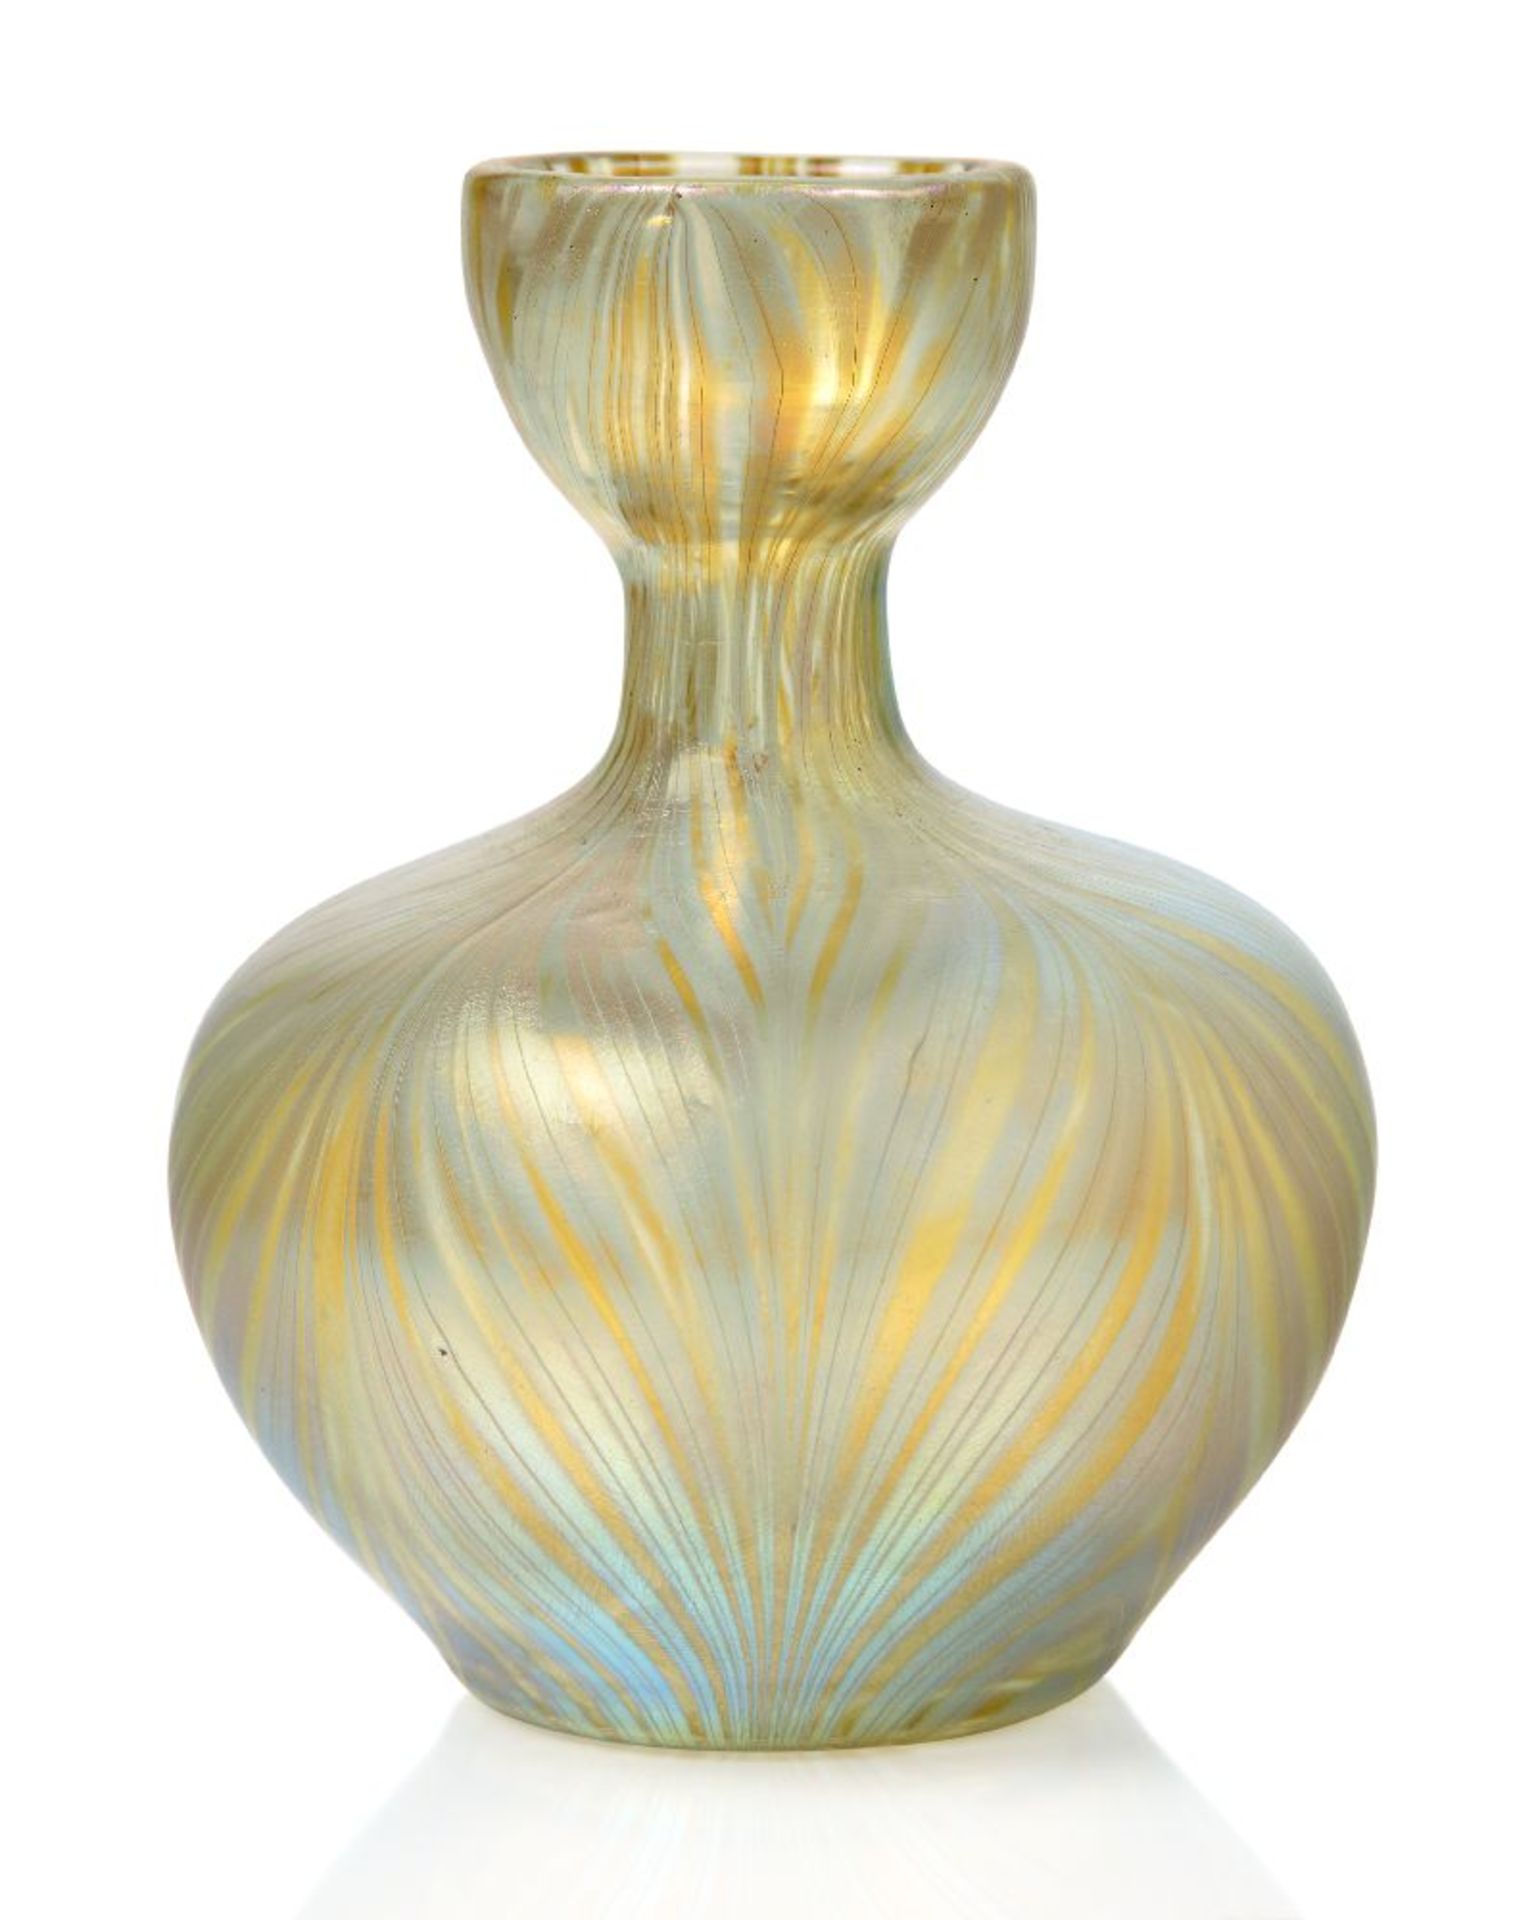 Loetz (Austrian), an iridescent Phaenomen Candia glass vase, c.1900, PG 7501, ground out pontil